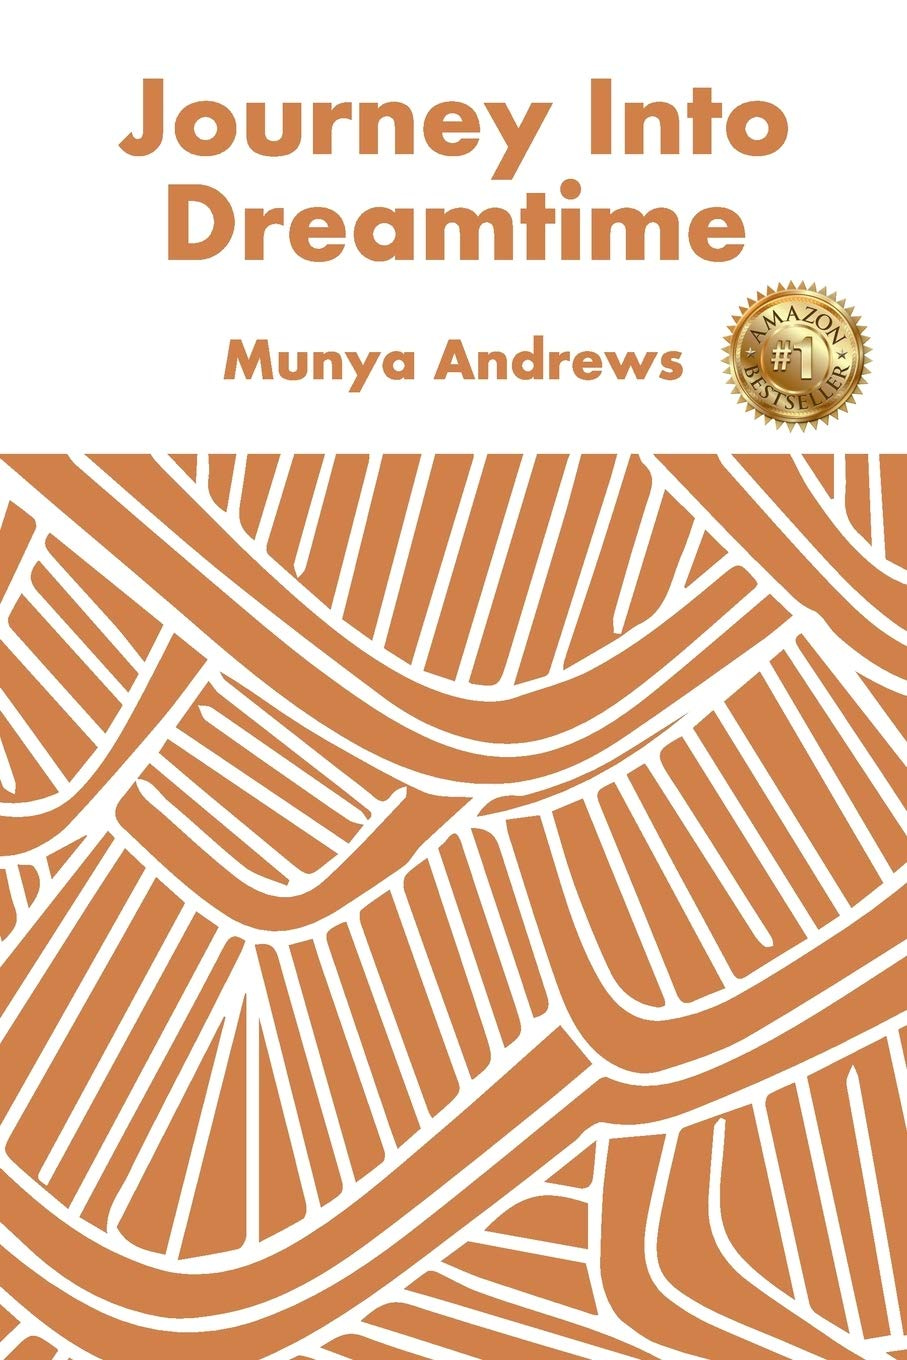 Journey Into Dreamtime (Aboriginal Dreamtime) : Andrews, Munya:  Amazon.co.uk: Books